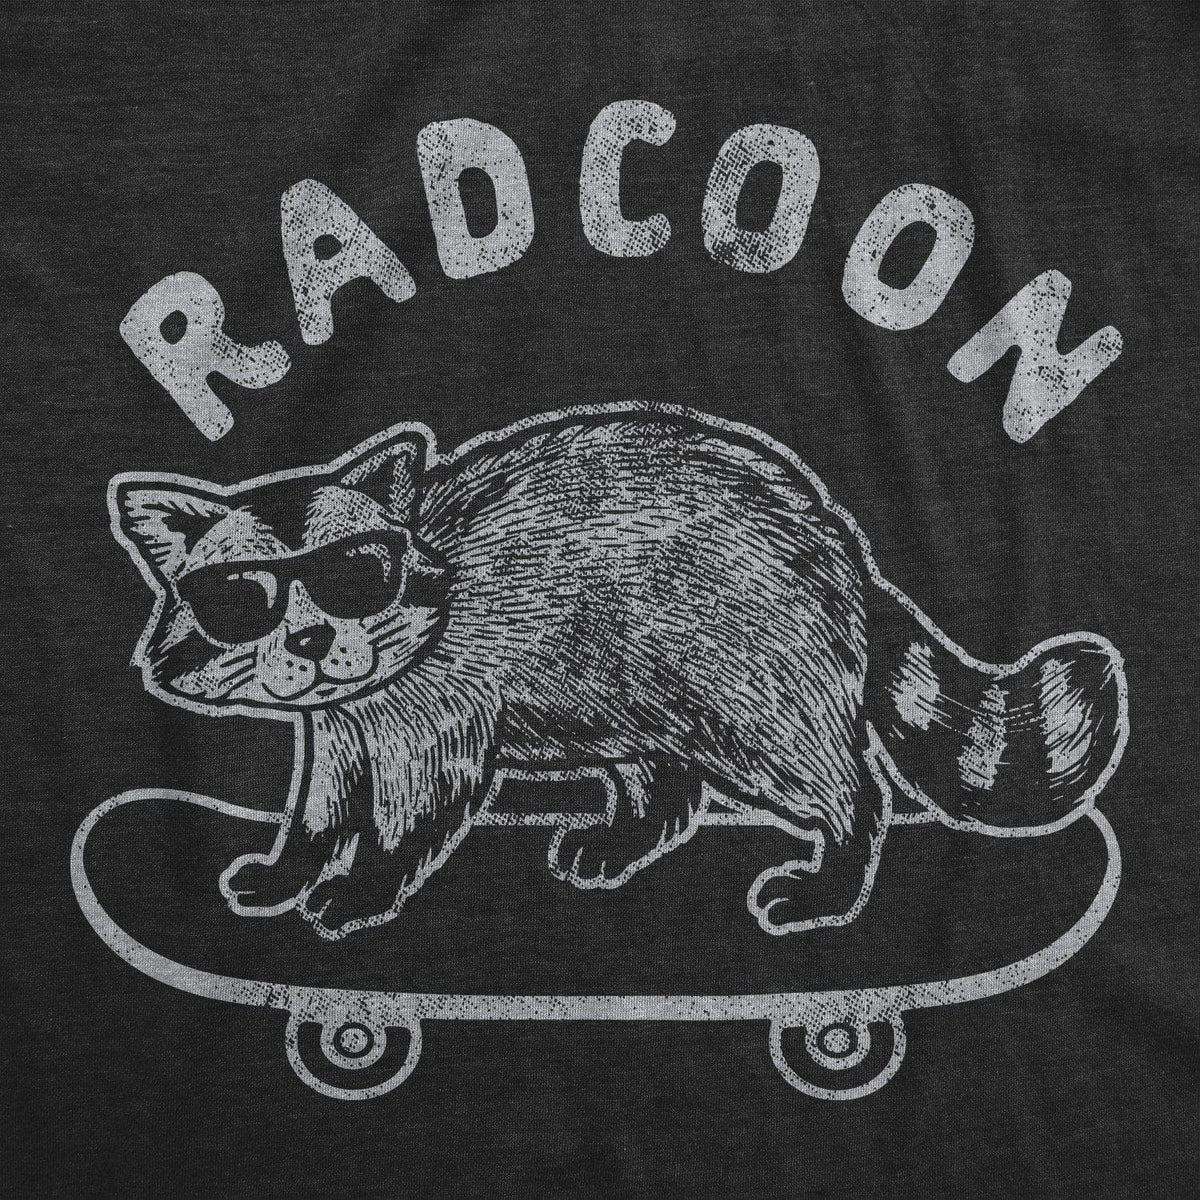 Radcoon Men&#39;s Tshirt - Crazy Dog T-Shirts